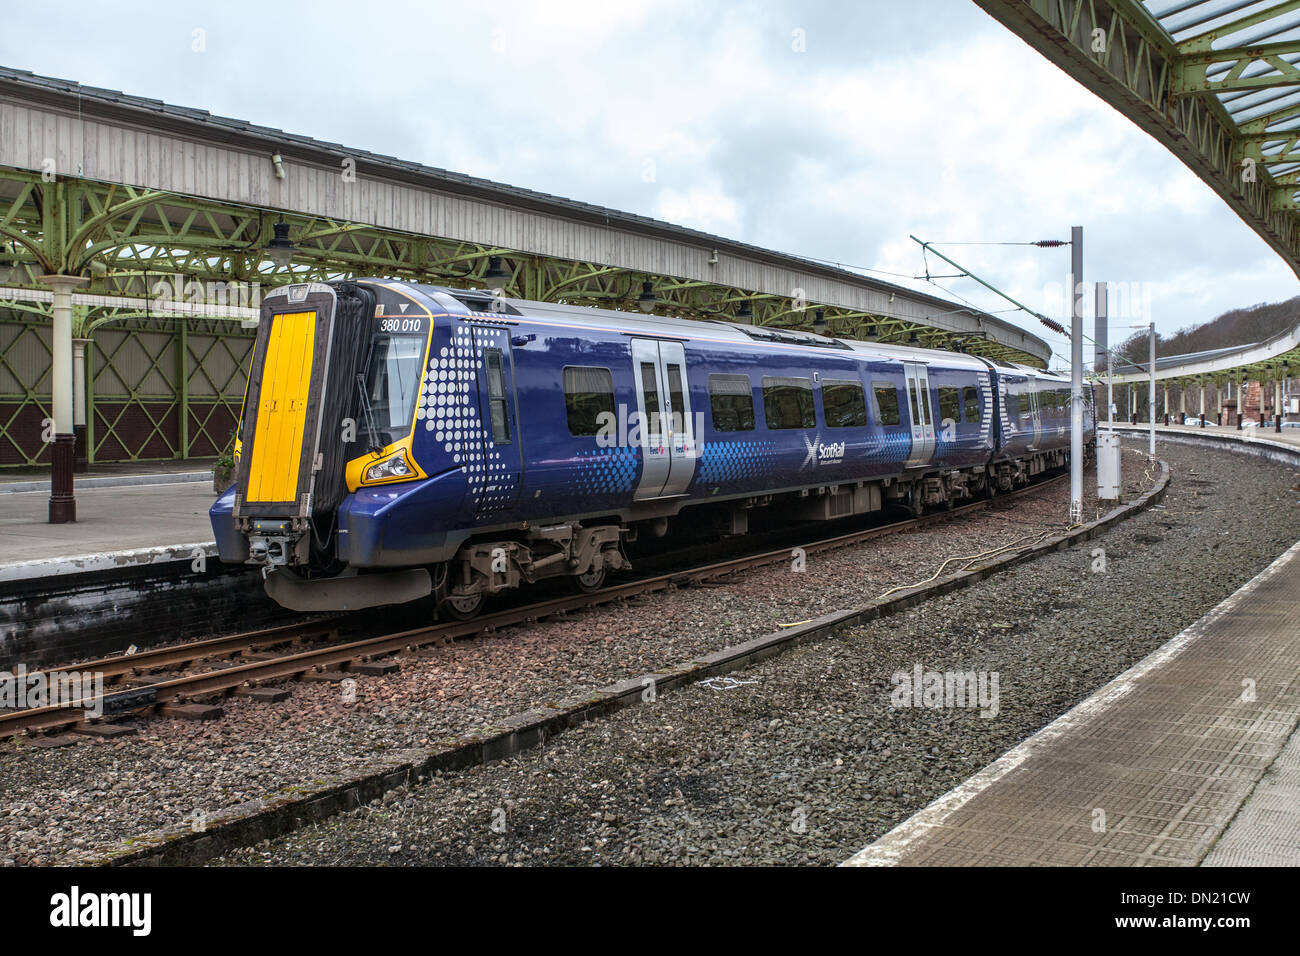 Scotrail Class 380 010 Electric Multiple Unit, Wemyss Bay Rail Station, Inverclyde, Scotland Stock Photo